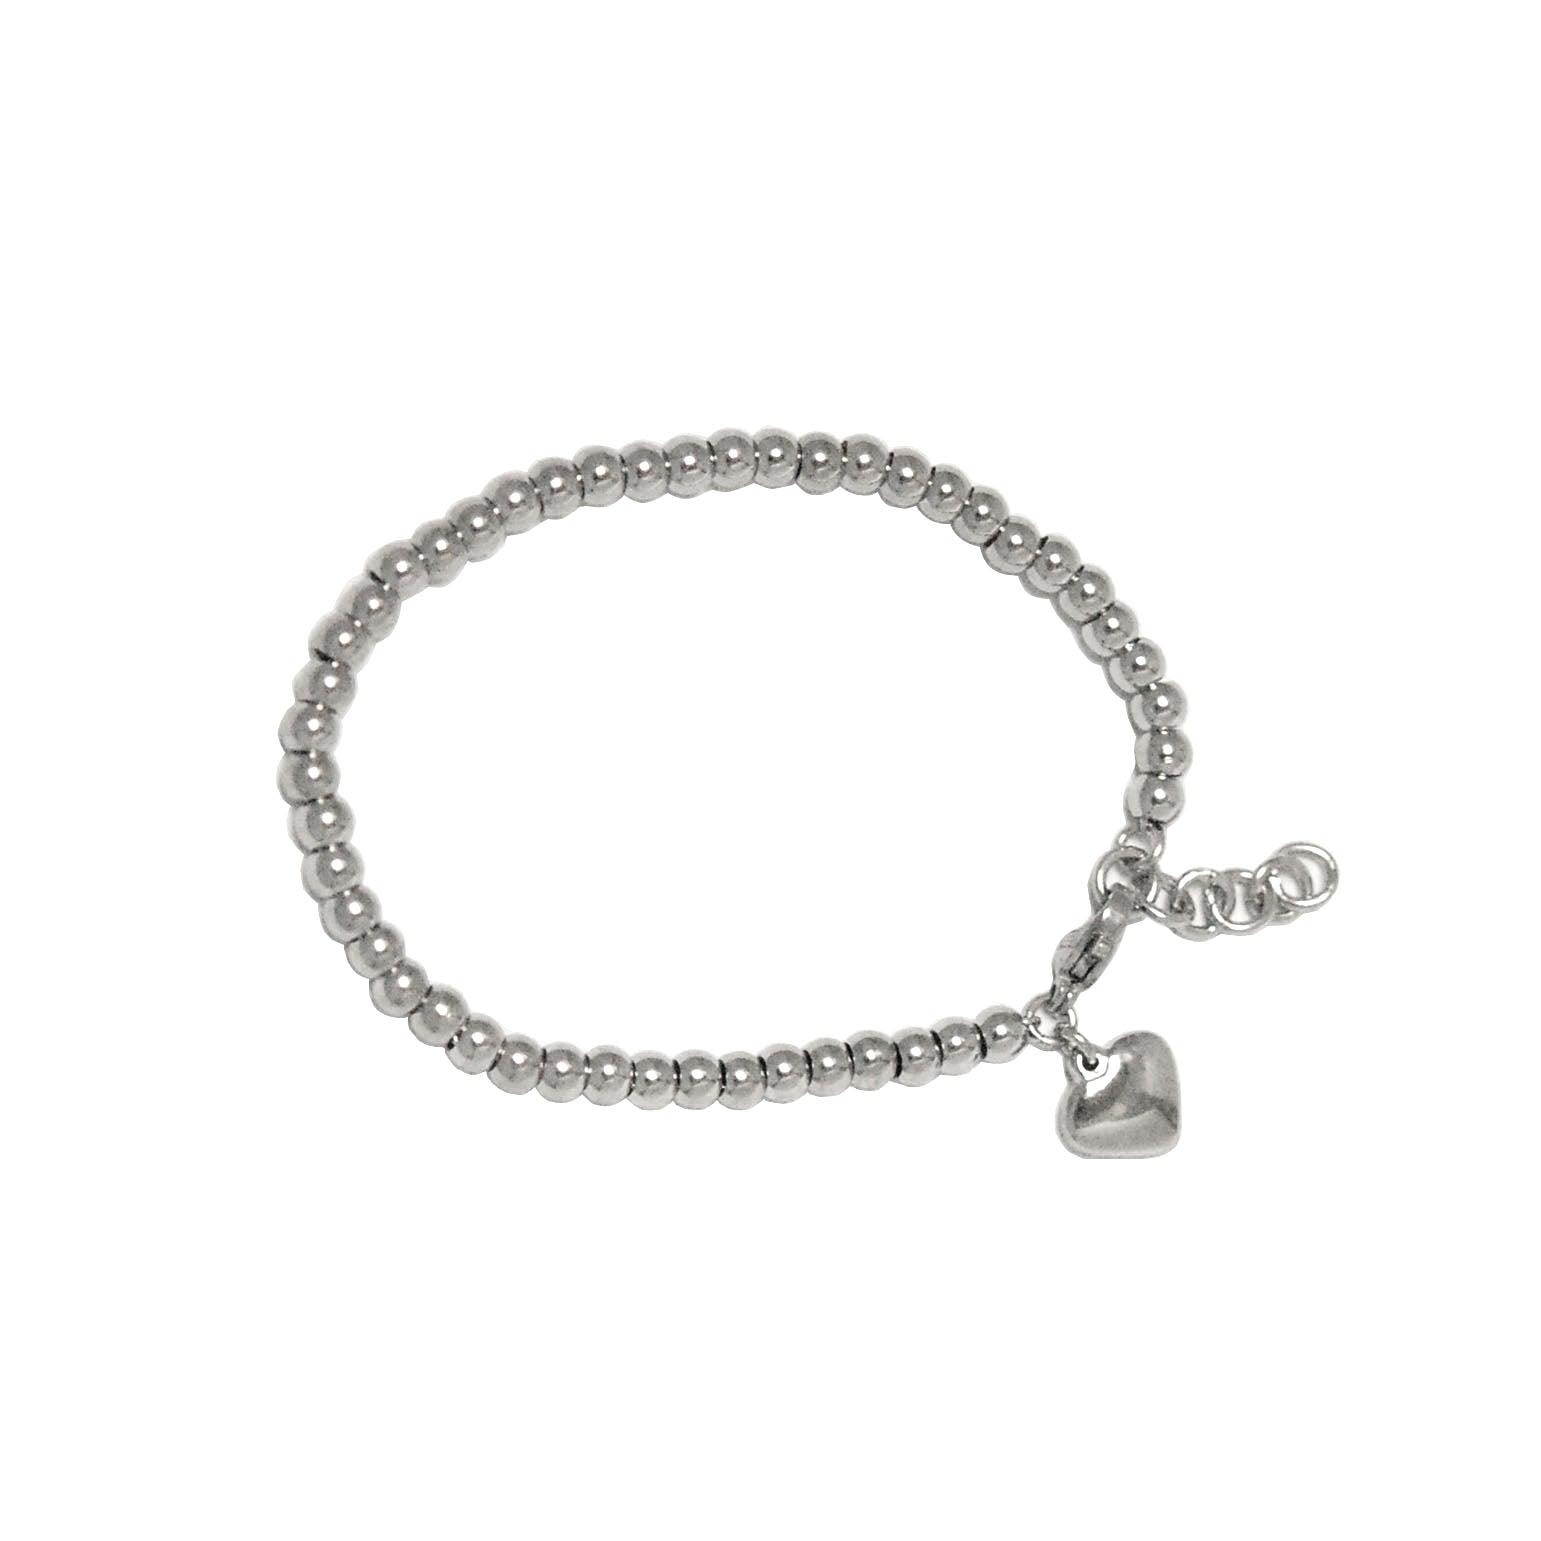 ESBL 5581: 50 Steel Ball Bracelet w/ Baby Heart Charm